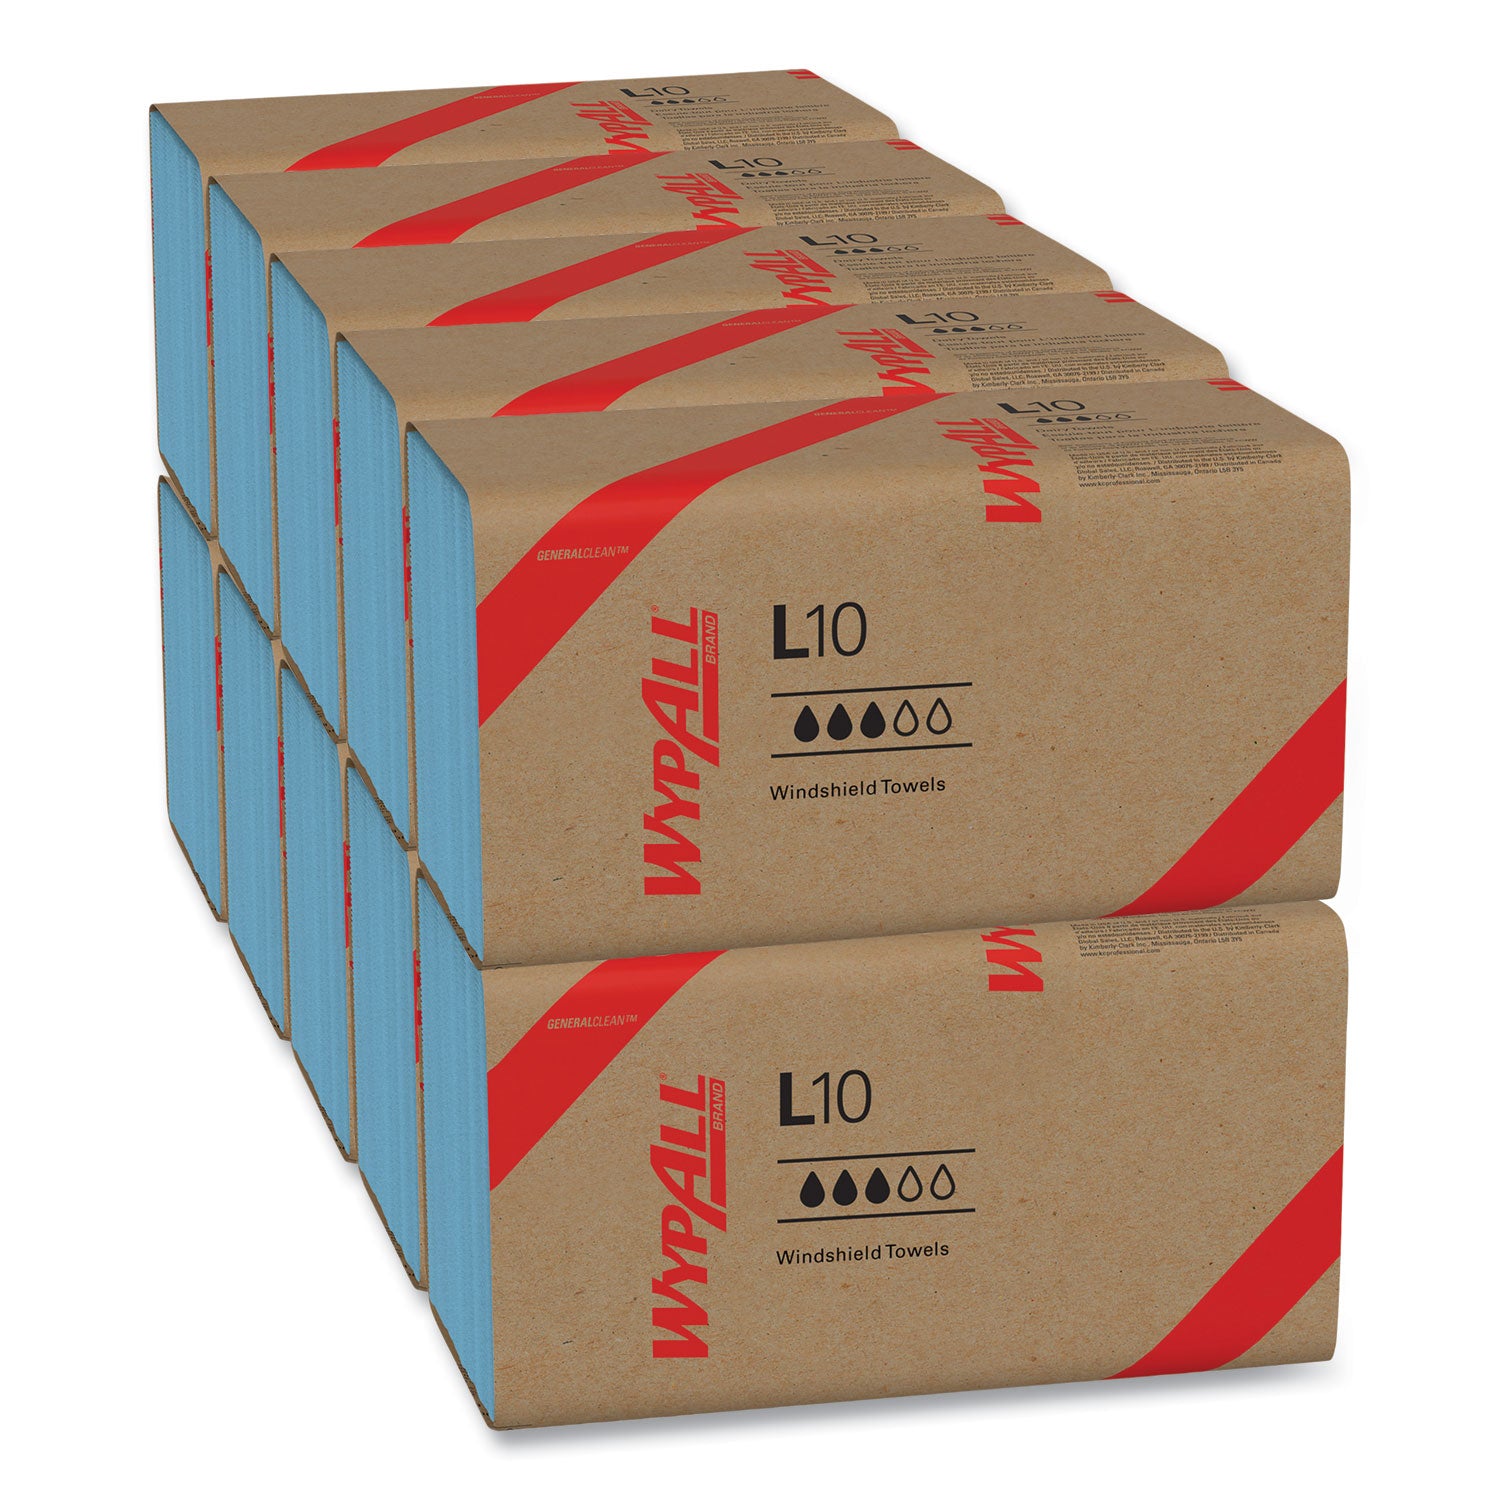 L10 Windshield Towels, 1-Ply, 9.1 x 10.25, Light Blue, 224/Pack, 10 Packs/Carton - 